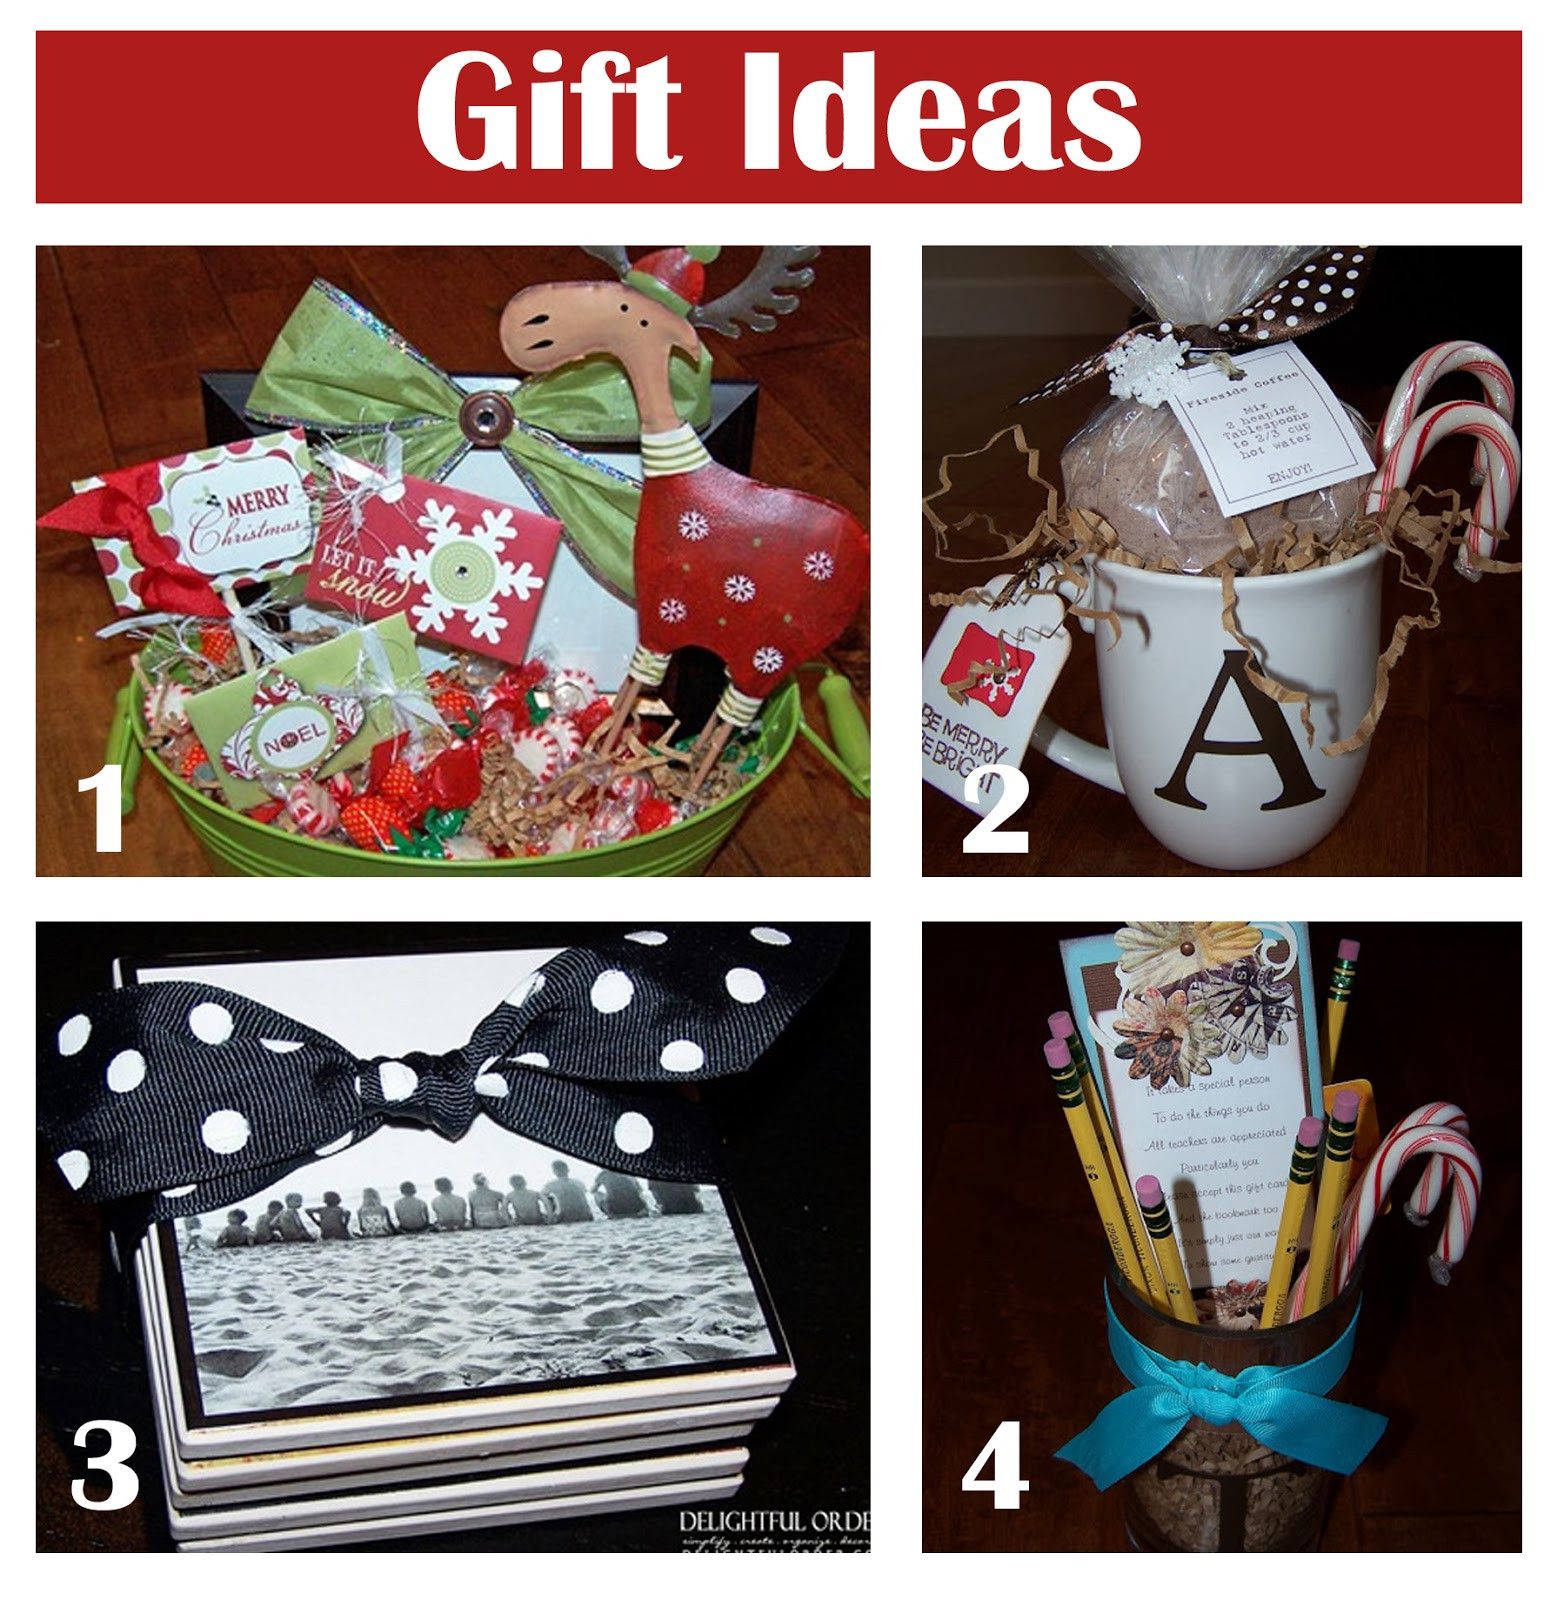 Best ideas about Christmas Gift Card Ideas
. Save or Pin Delightful Order Teacher Neighbor Christmas Gift Ideas Now.